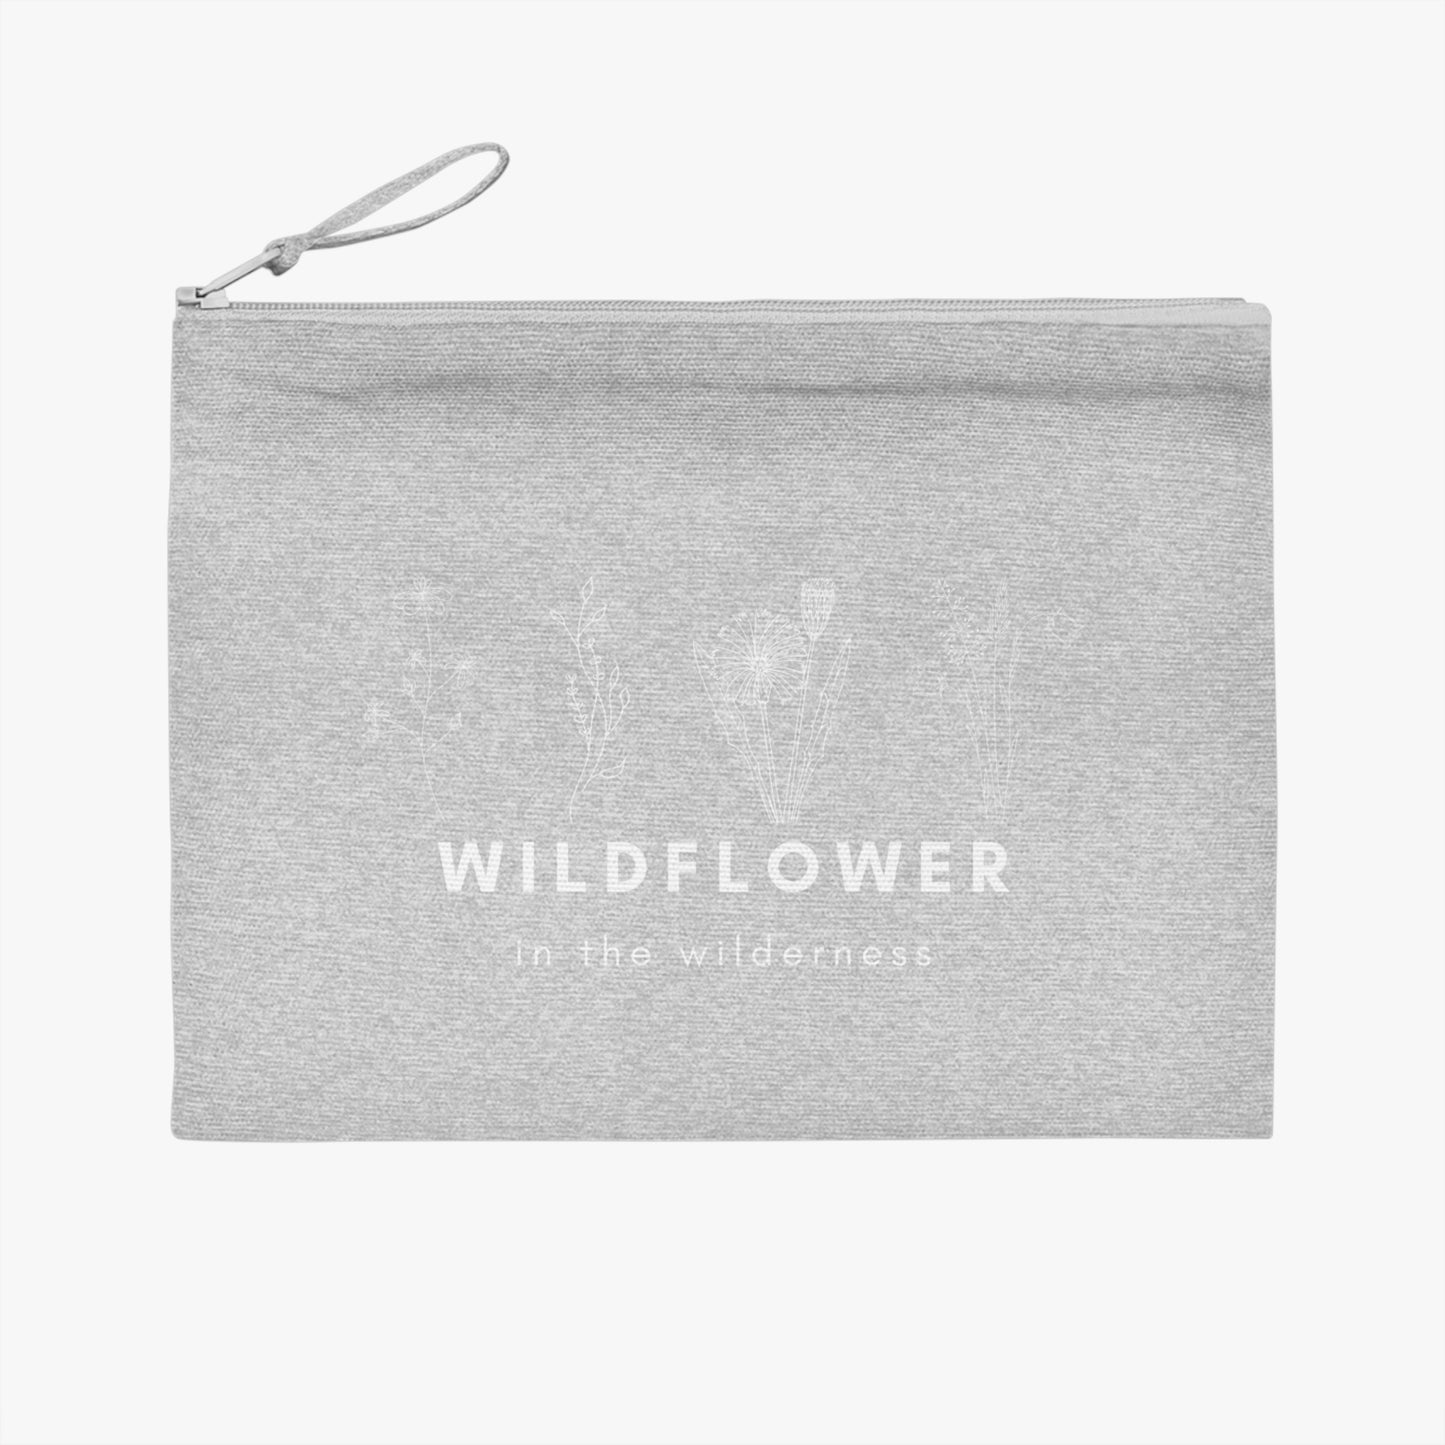 Wildflower in the Wilderness Pencil Case